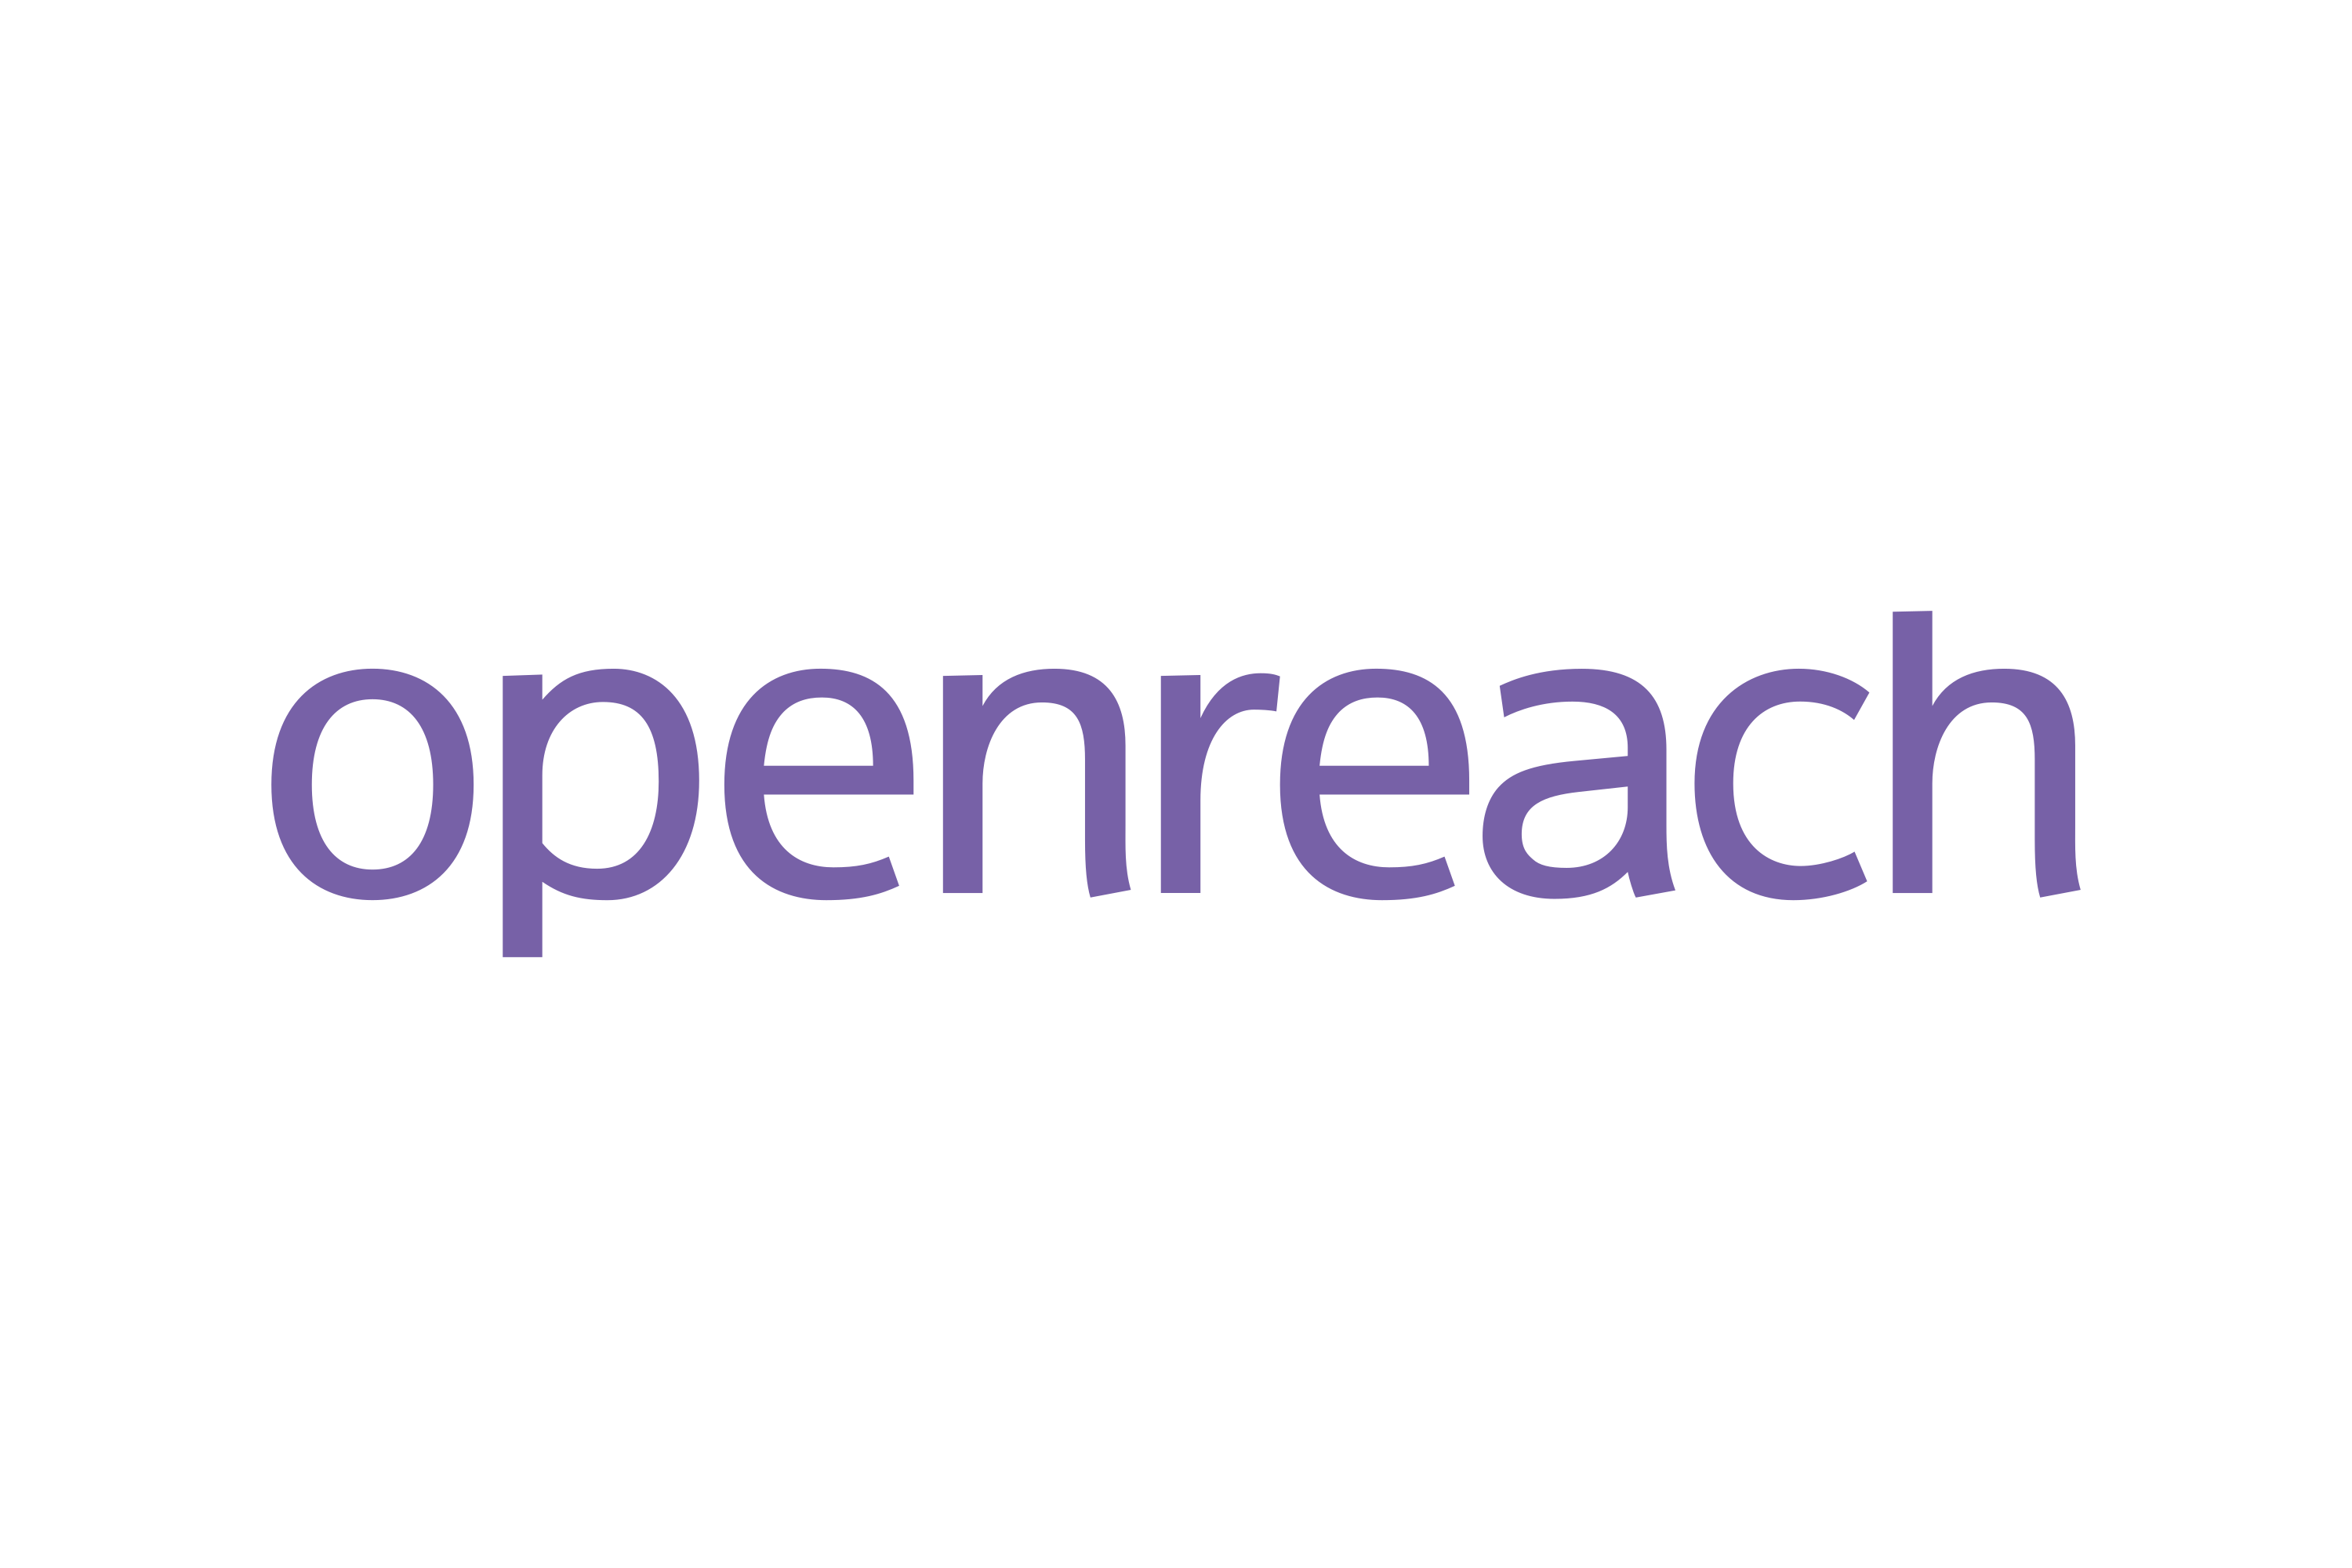 Openreach Brand Logo